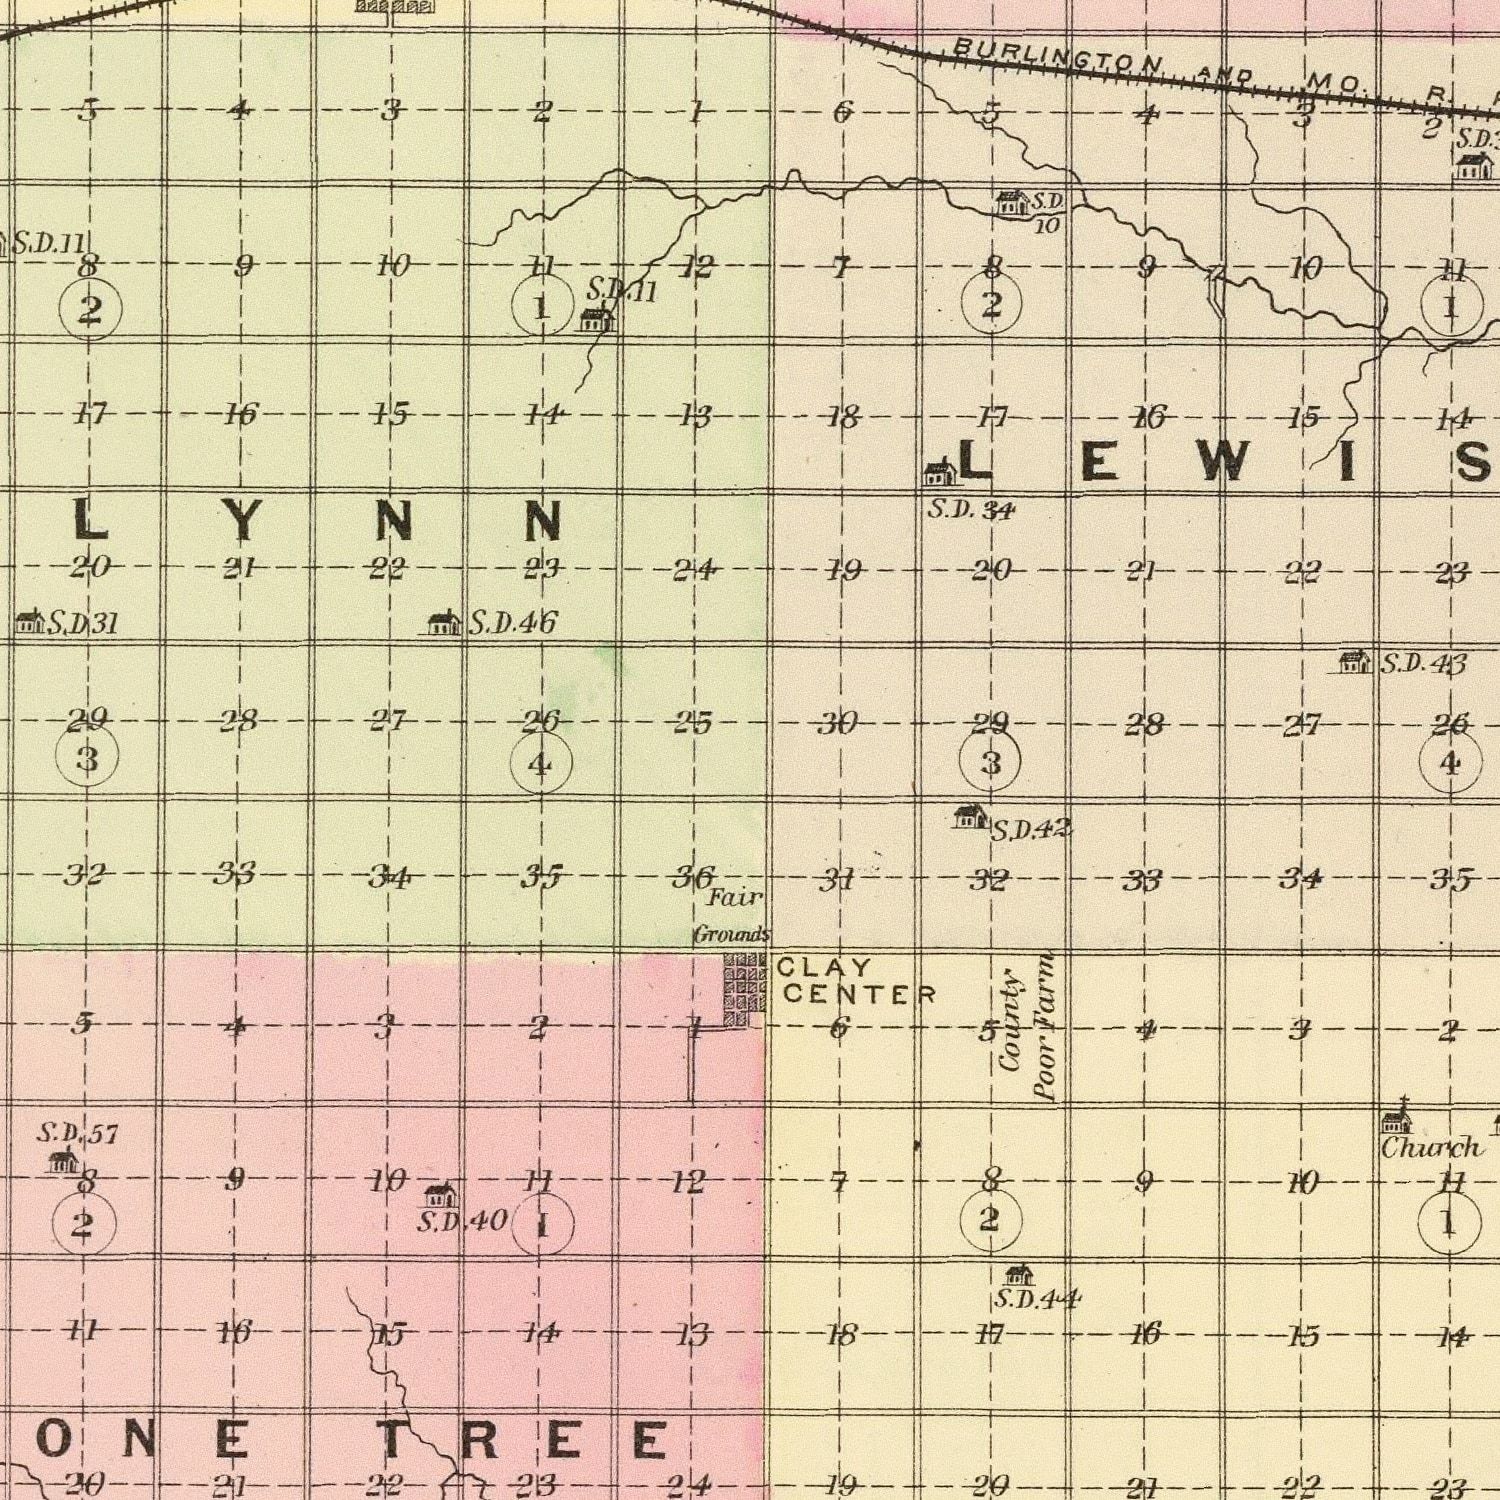 Vintage Map of Clay County Nebraska, 1885